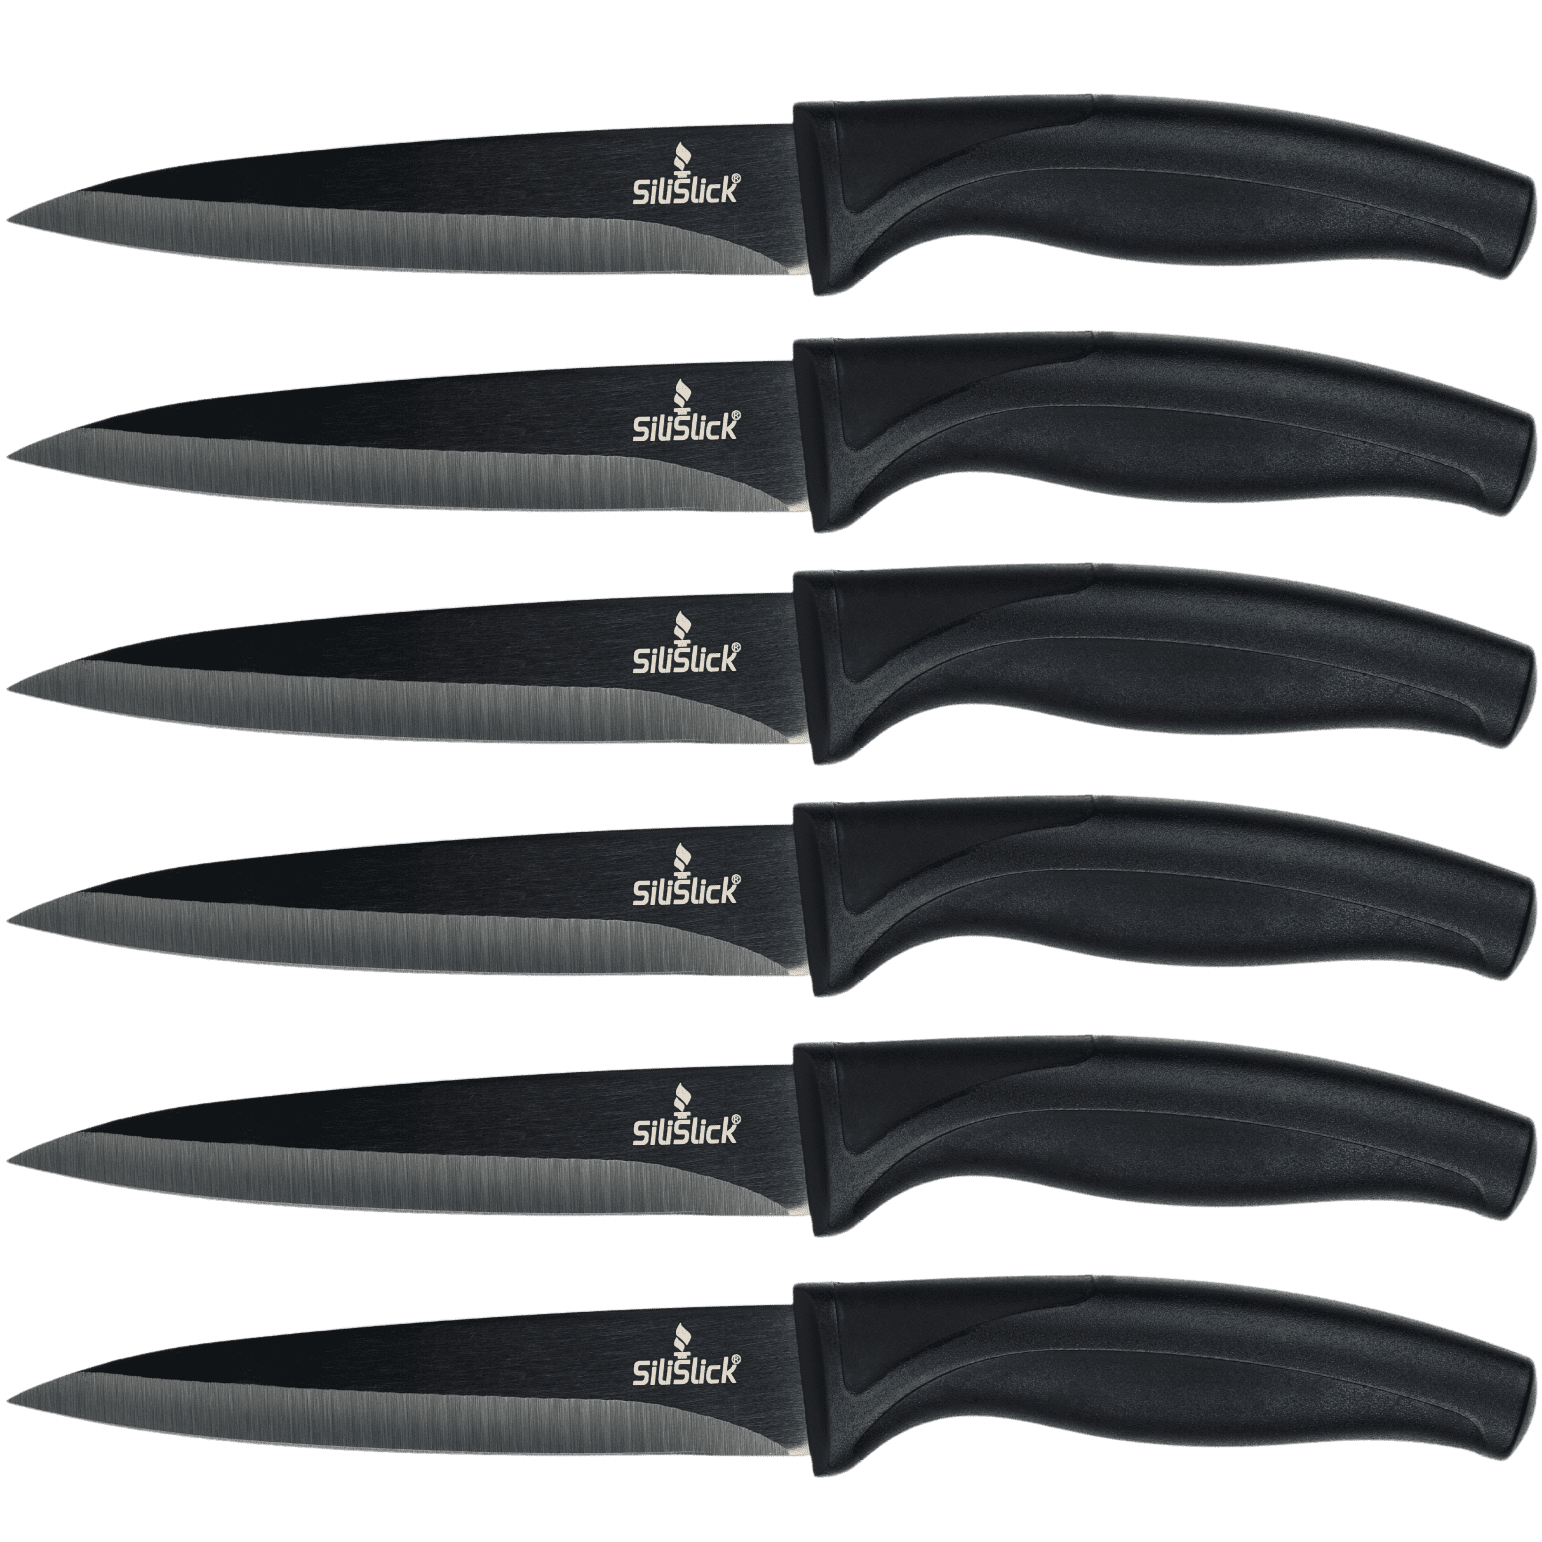 Stainless Steel Steak Knives 8.6 / 22.5 cm - Set of 6 - Comas - Rambo